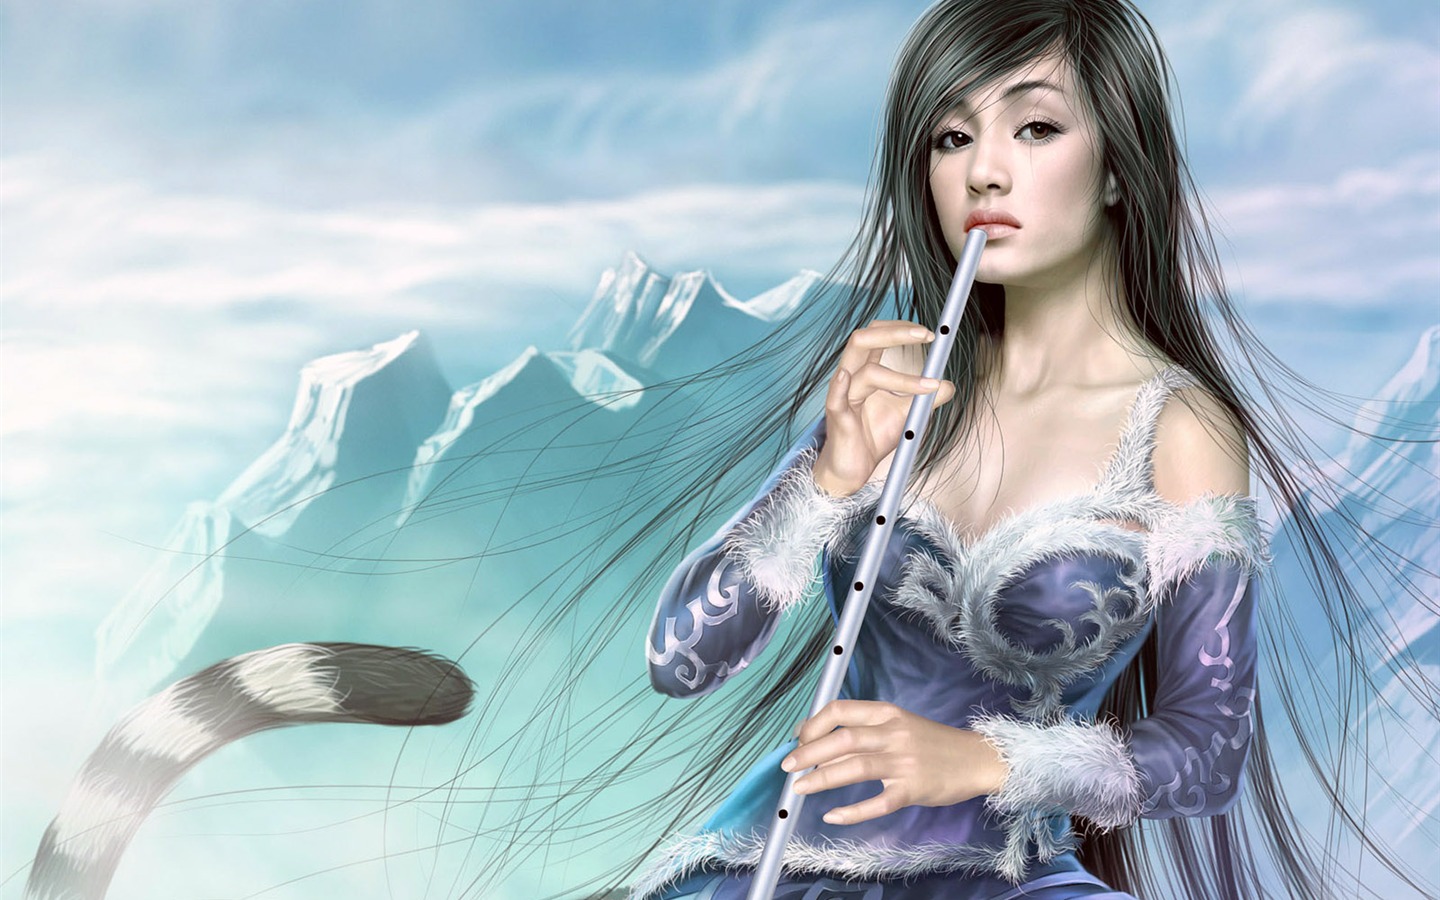 Beautiful women wallpaper fantasy illustrator #20 - 1440x900